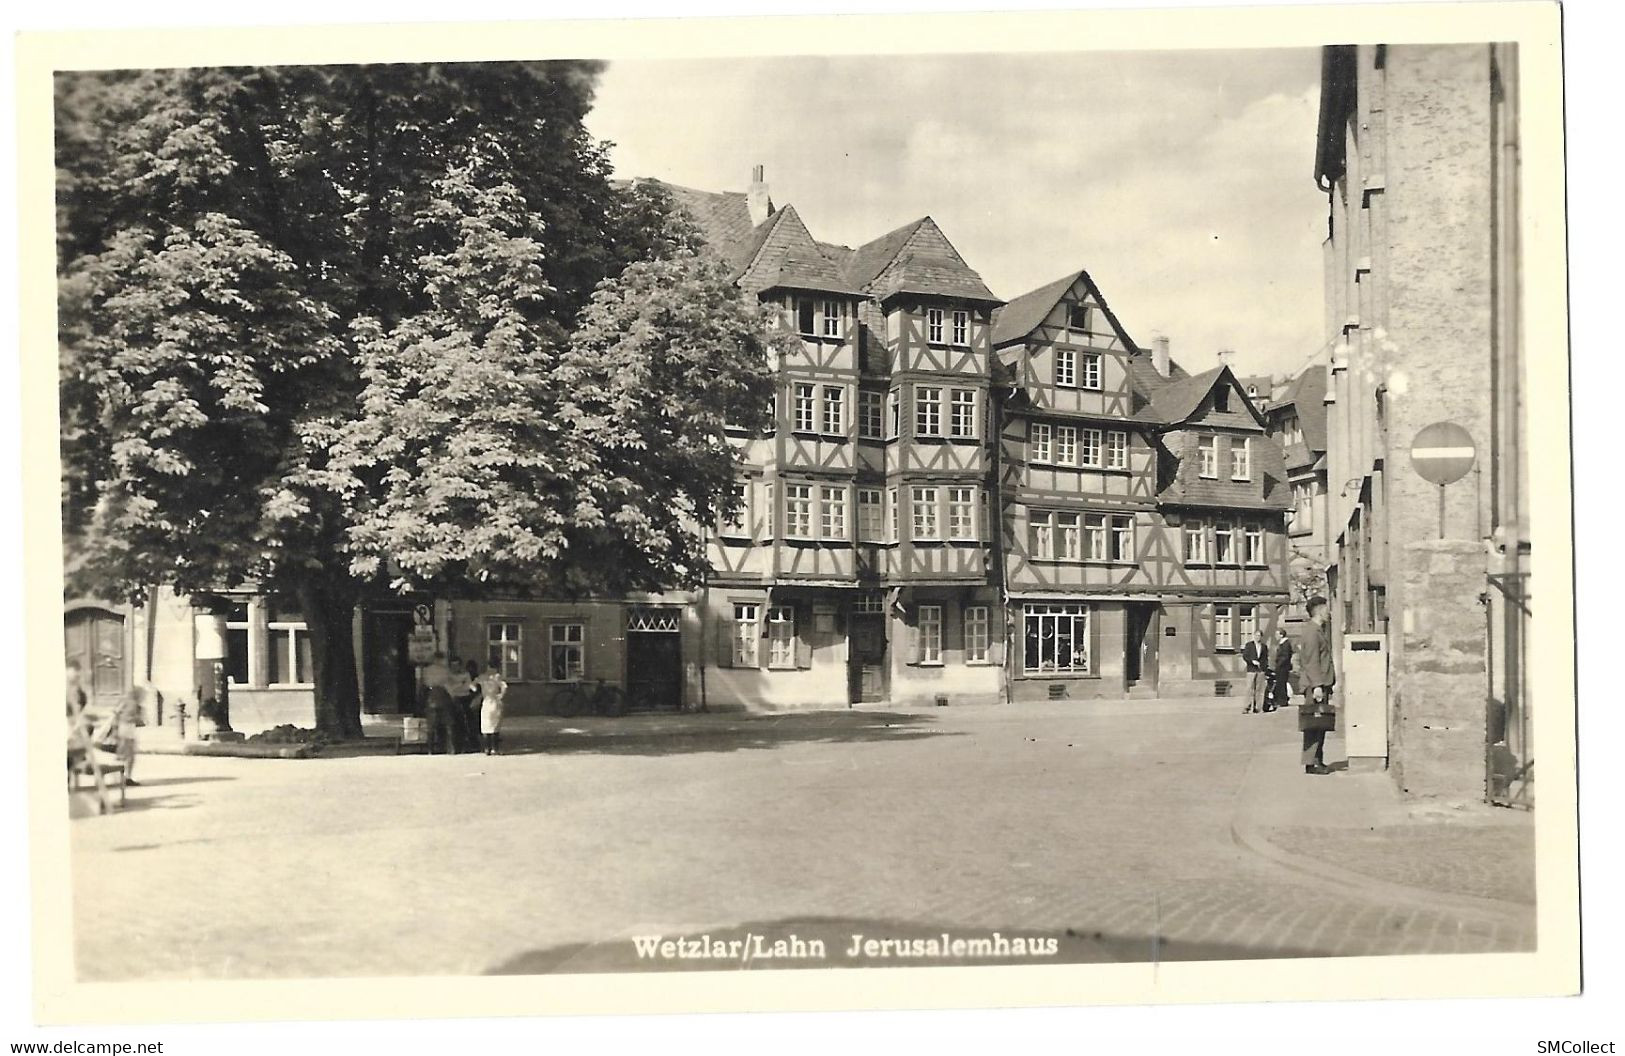 Wetzlar/Lahn, Jerusalemhaus (470) - Wetzlar